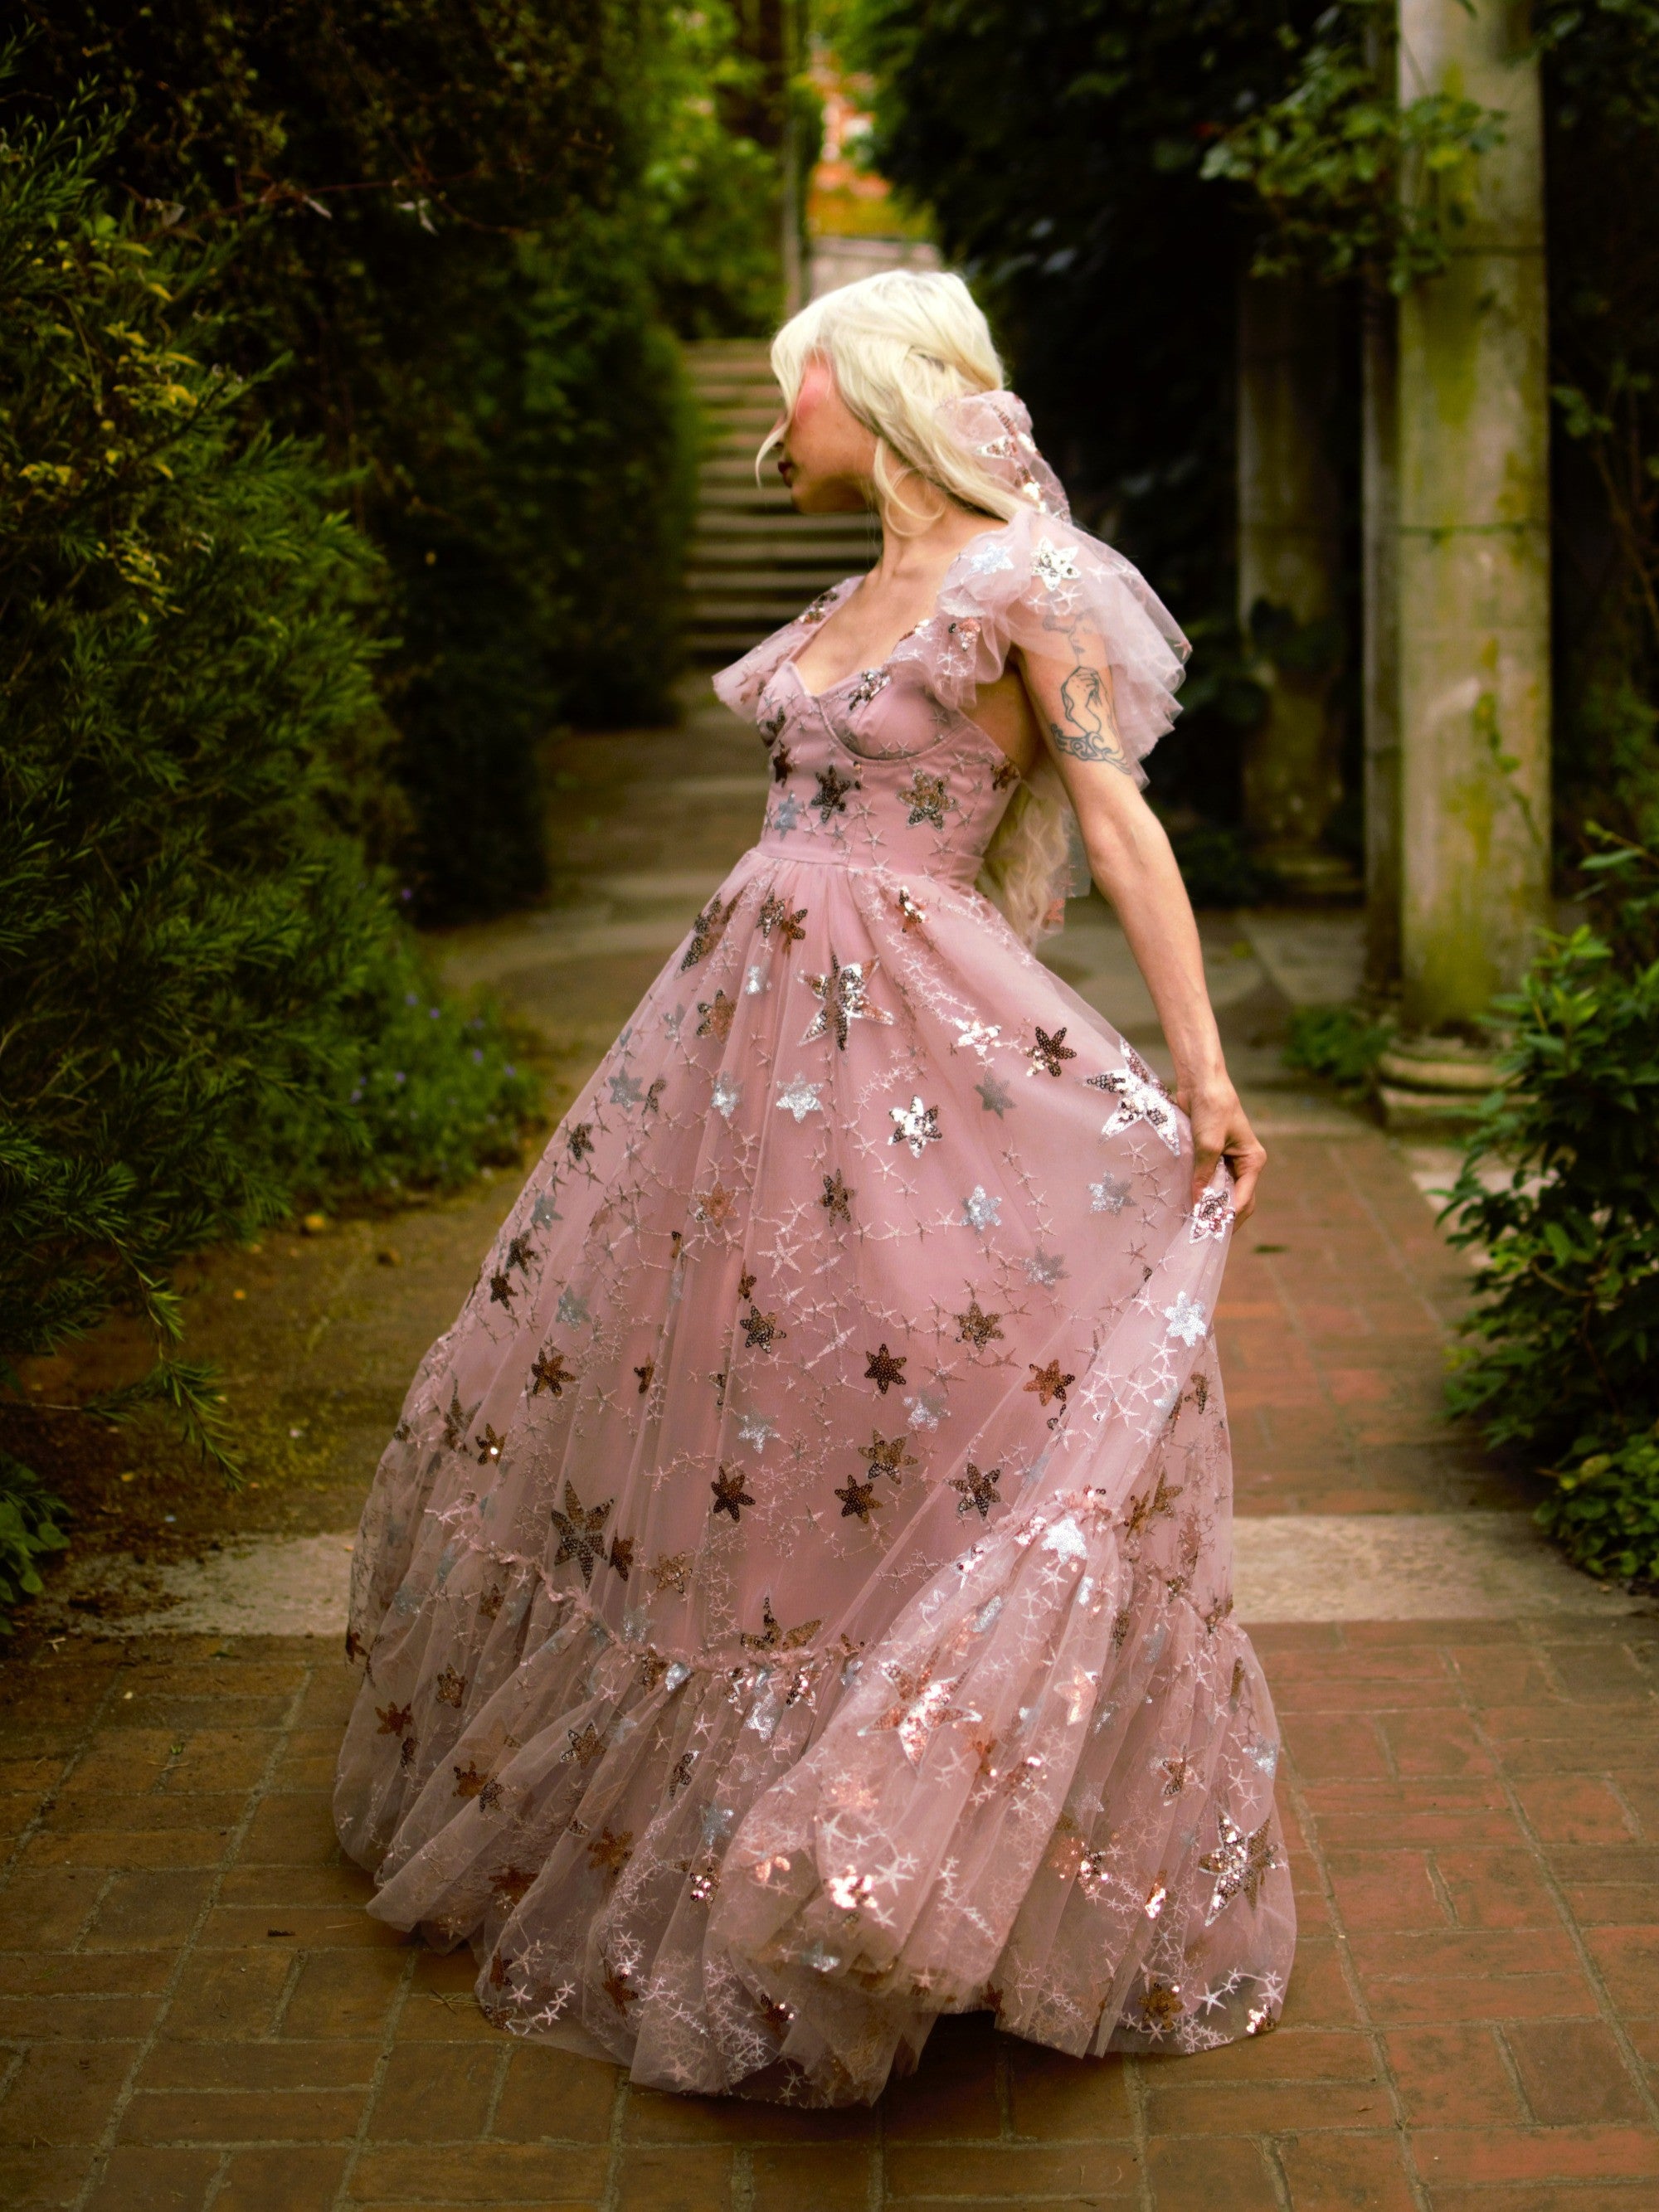 Starcrossed Lovers Princess Dress